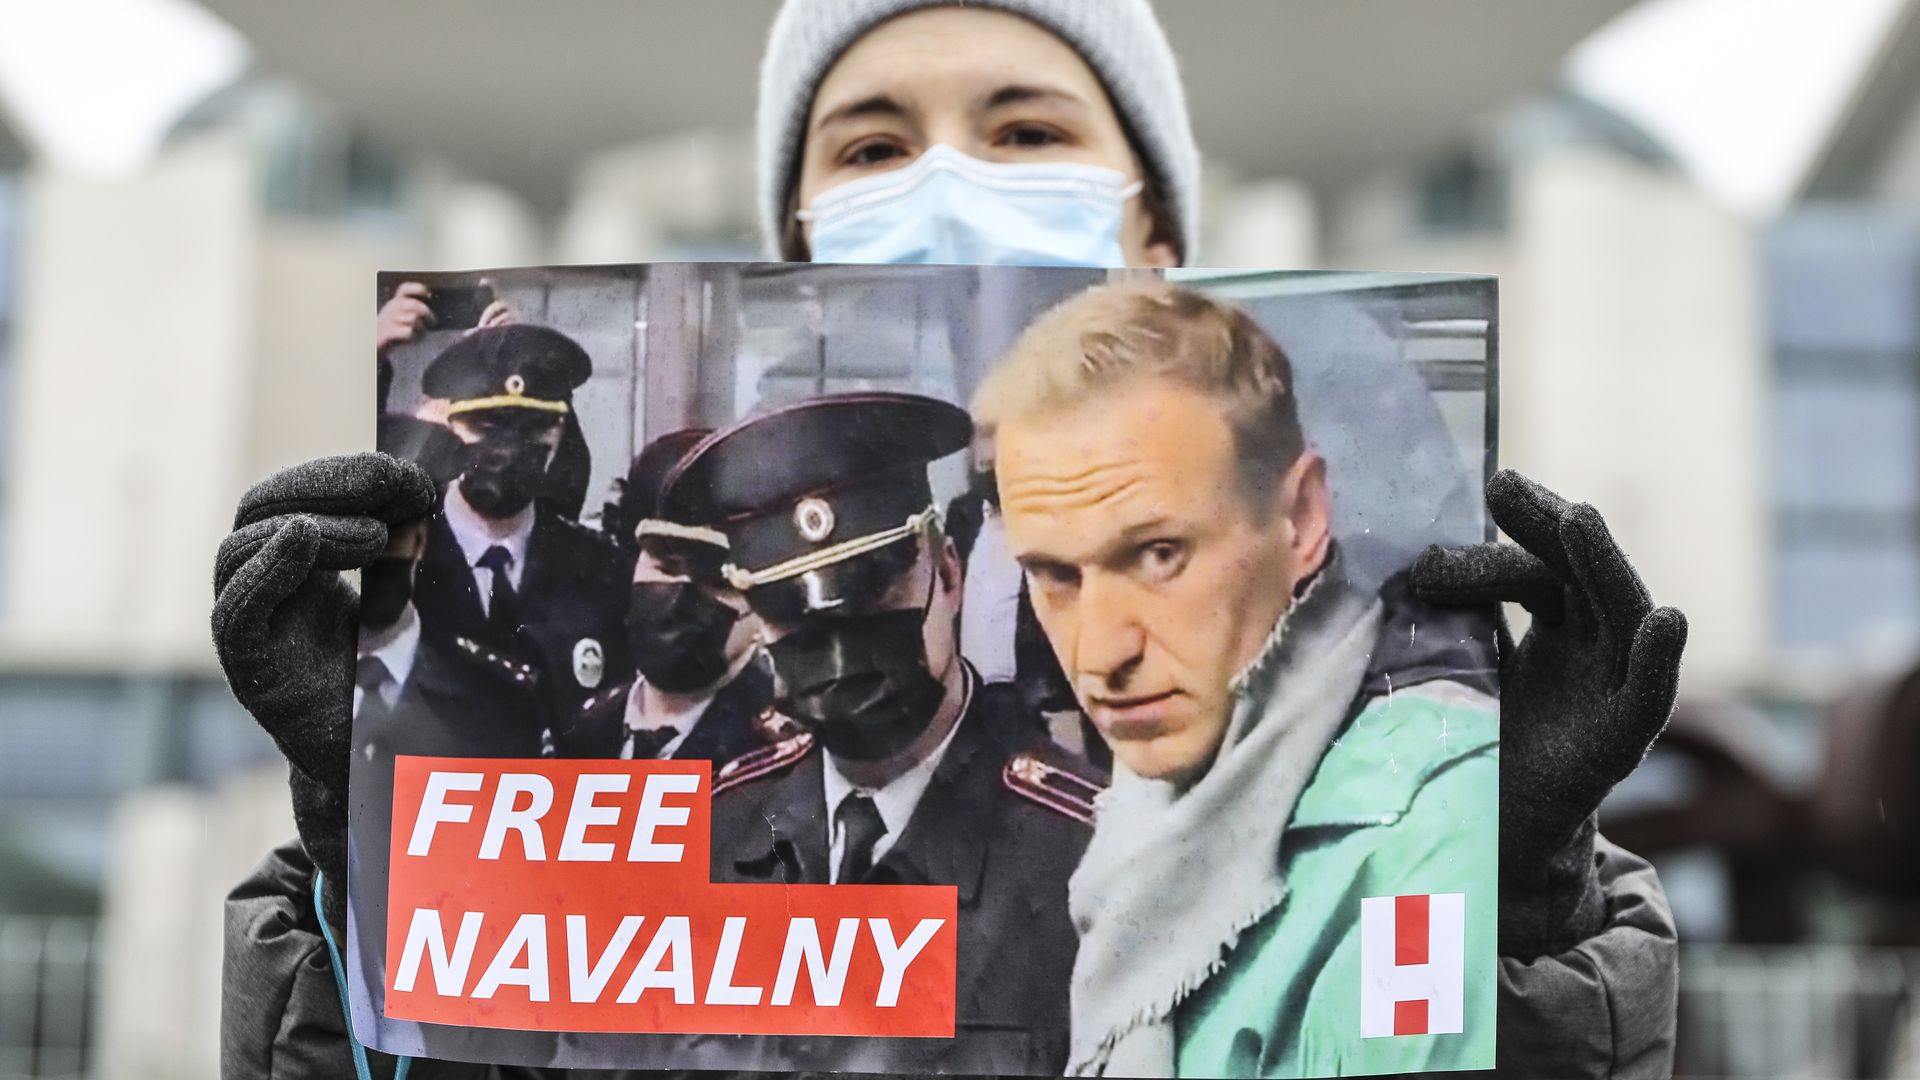 Protester holding Free Navalny sign